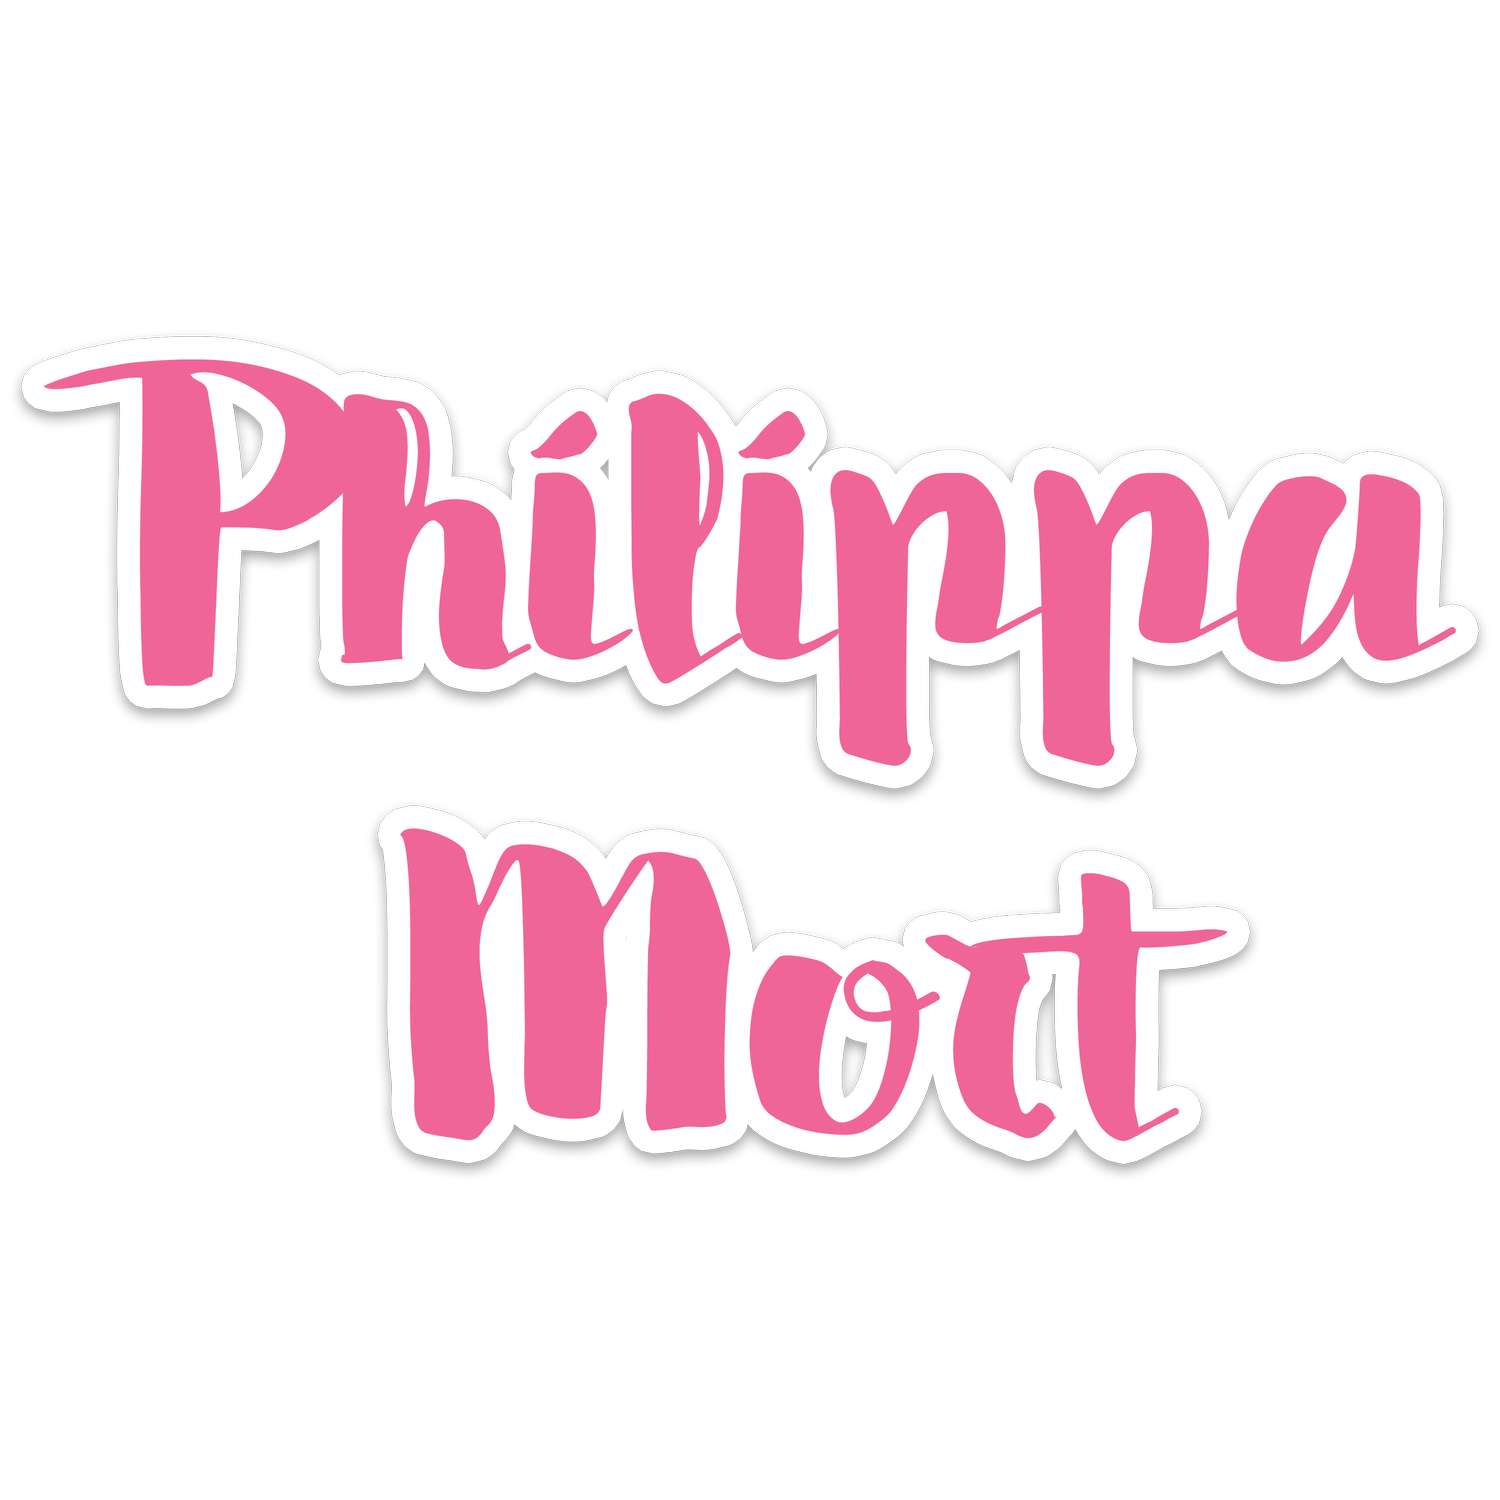 Philippa Mort